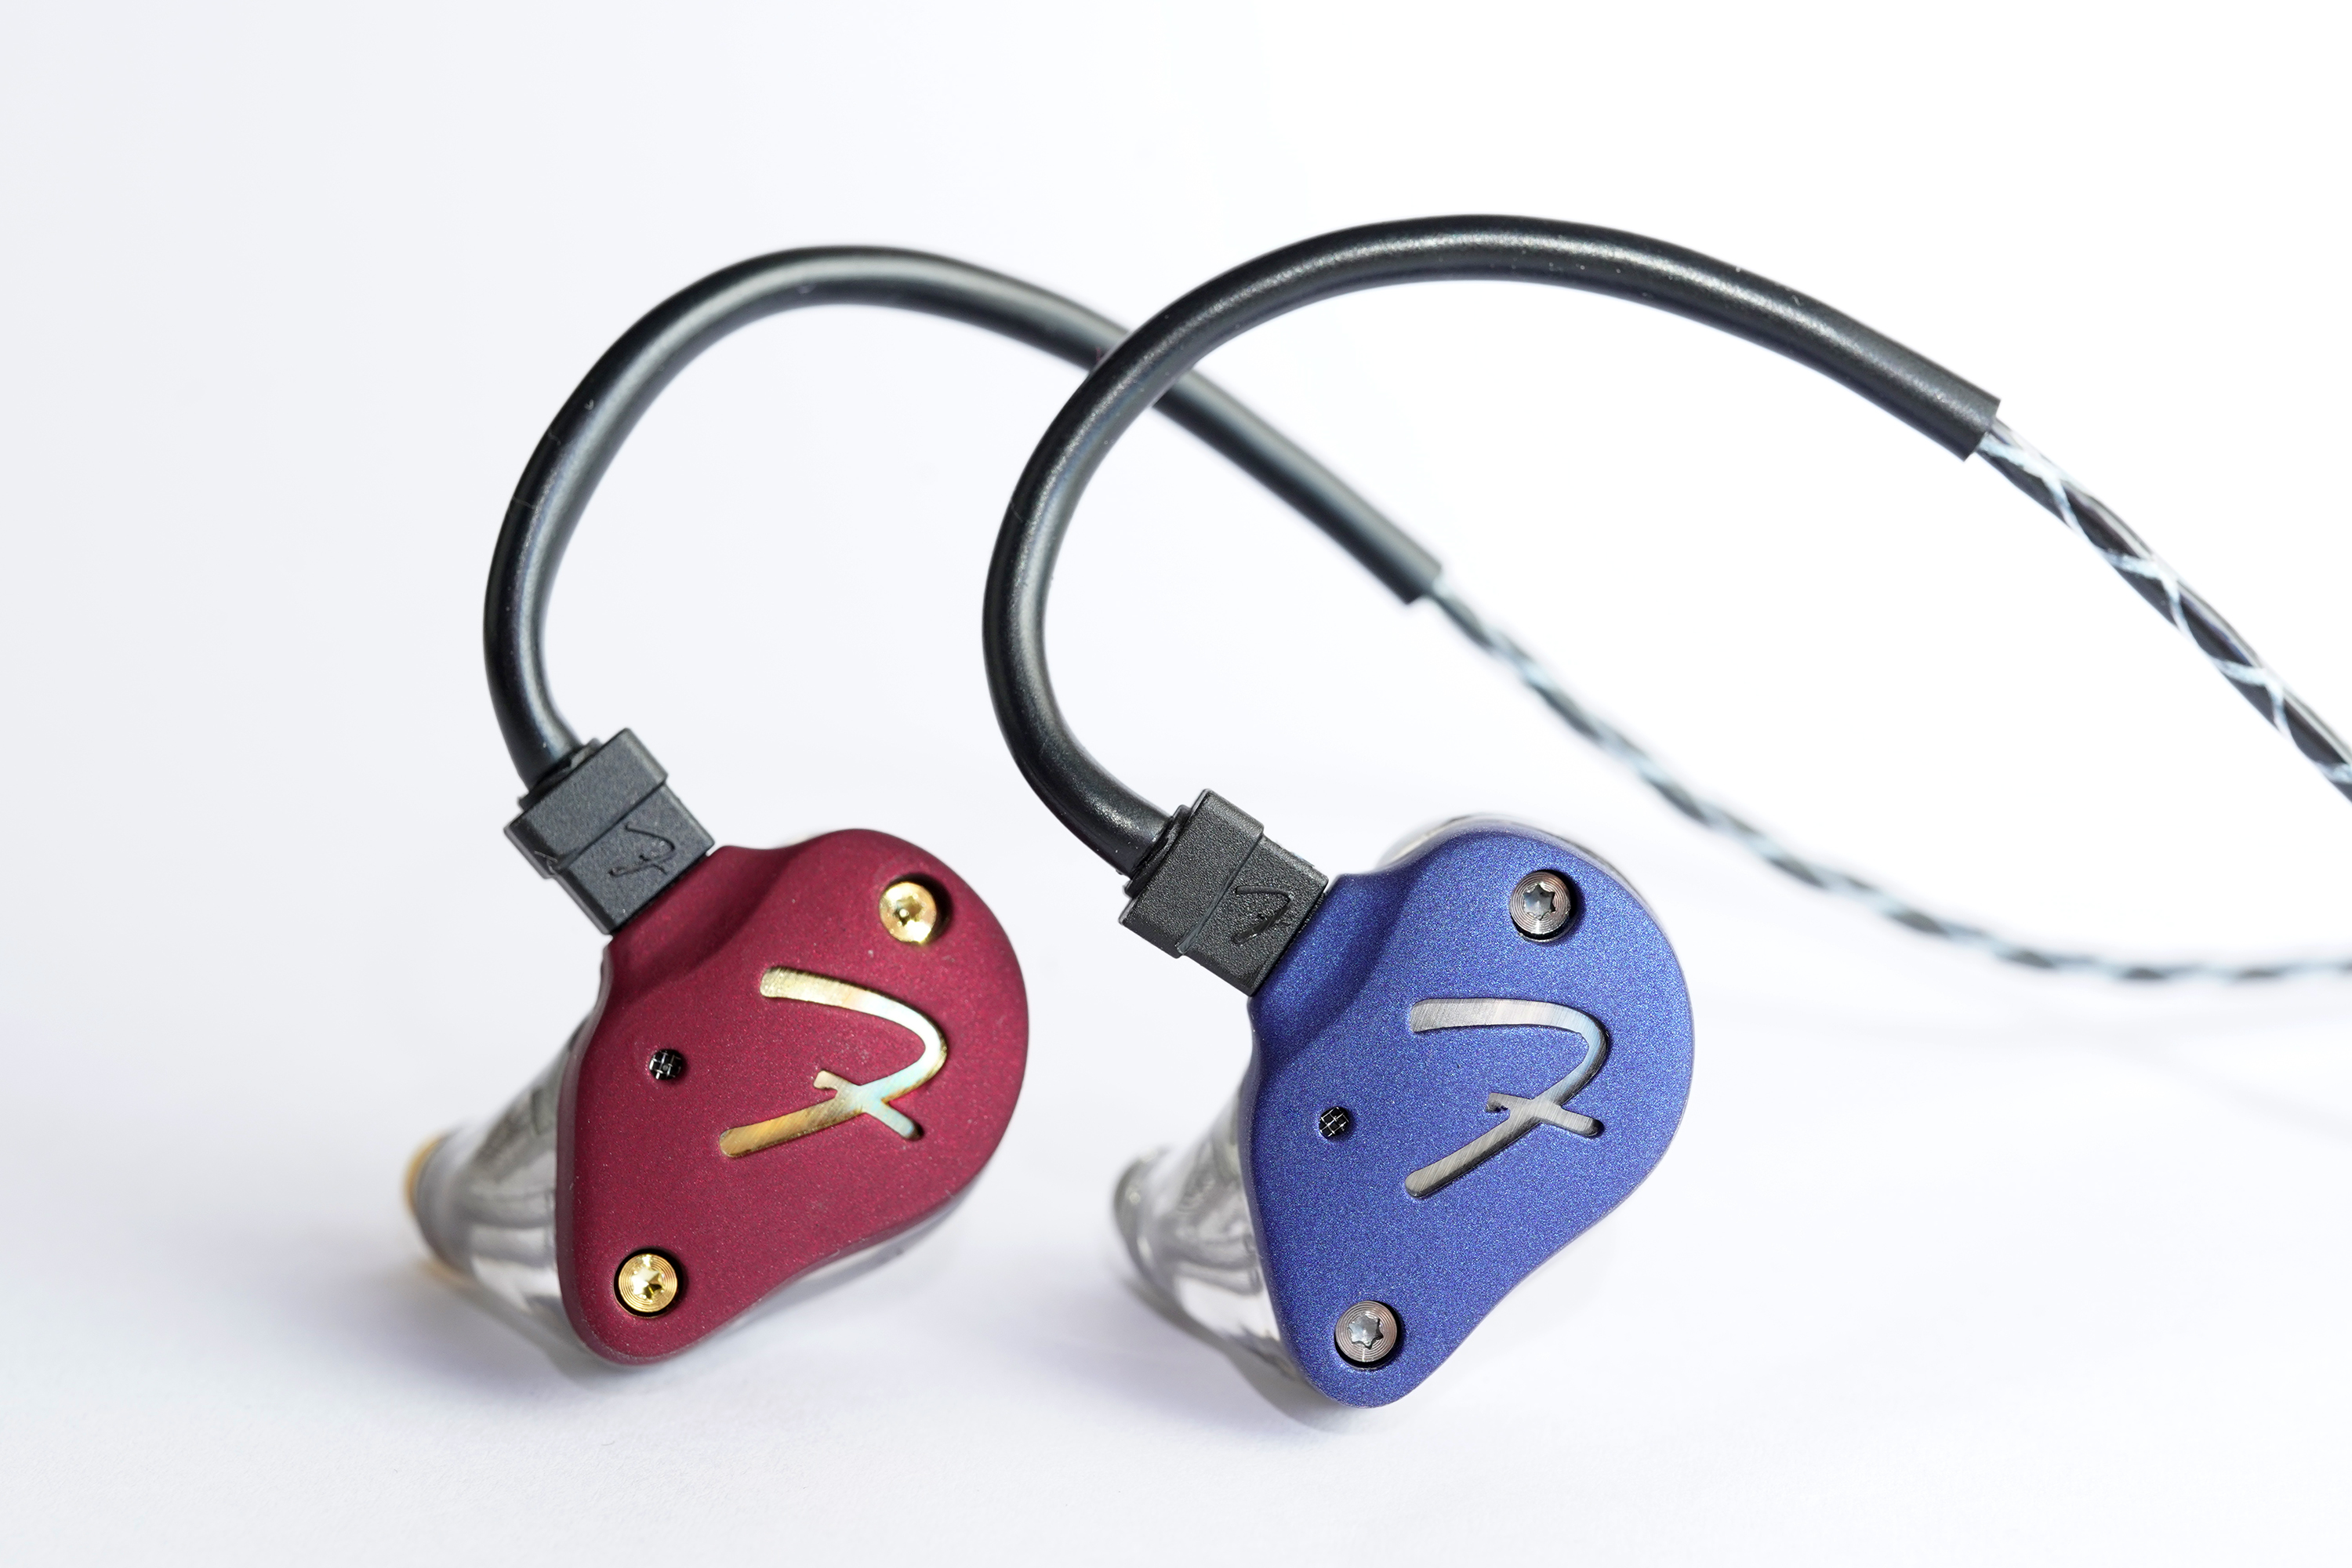 Fender Audio Design Lab 耳机系列迎来 Ten 2 新成员